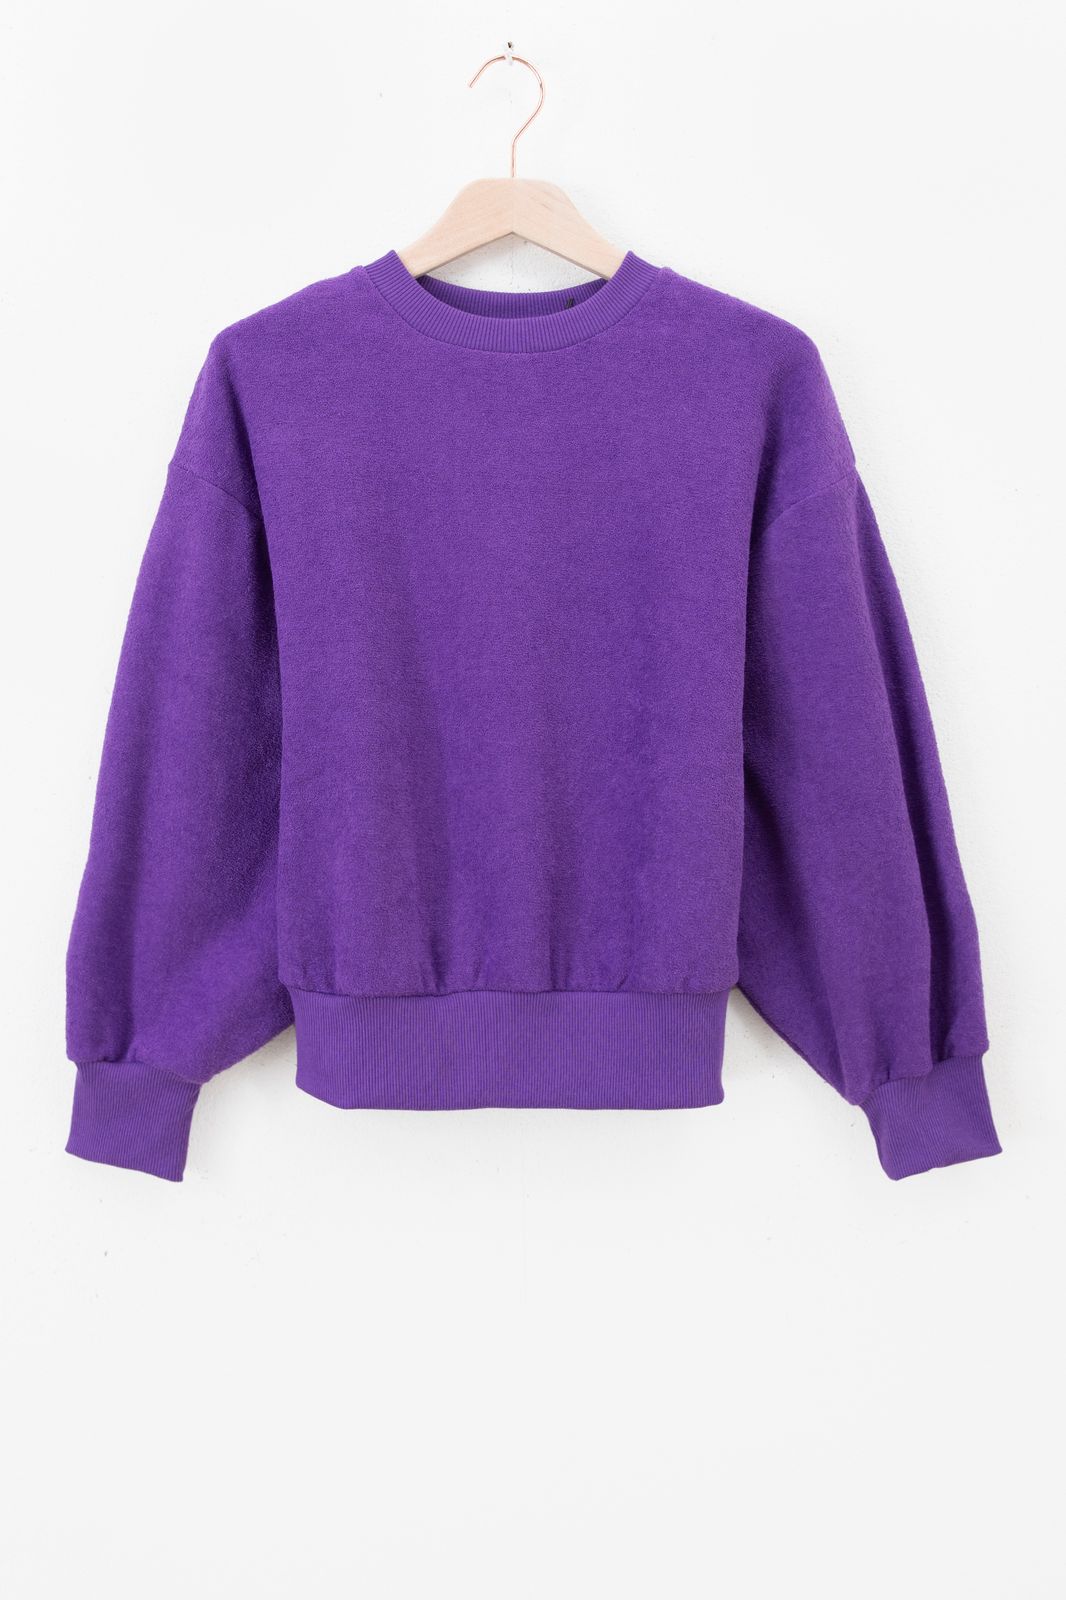 Sweater aus Nickistoff - lila